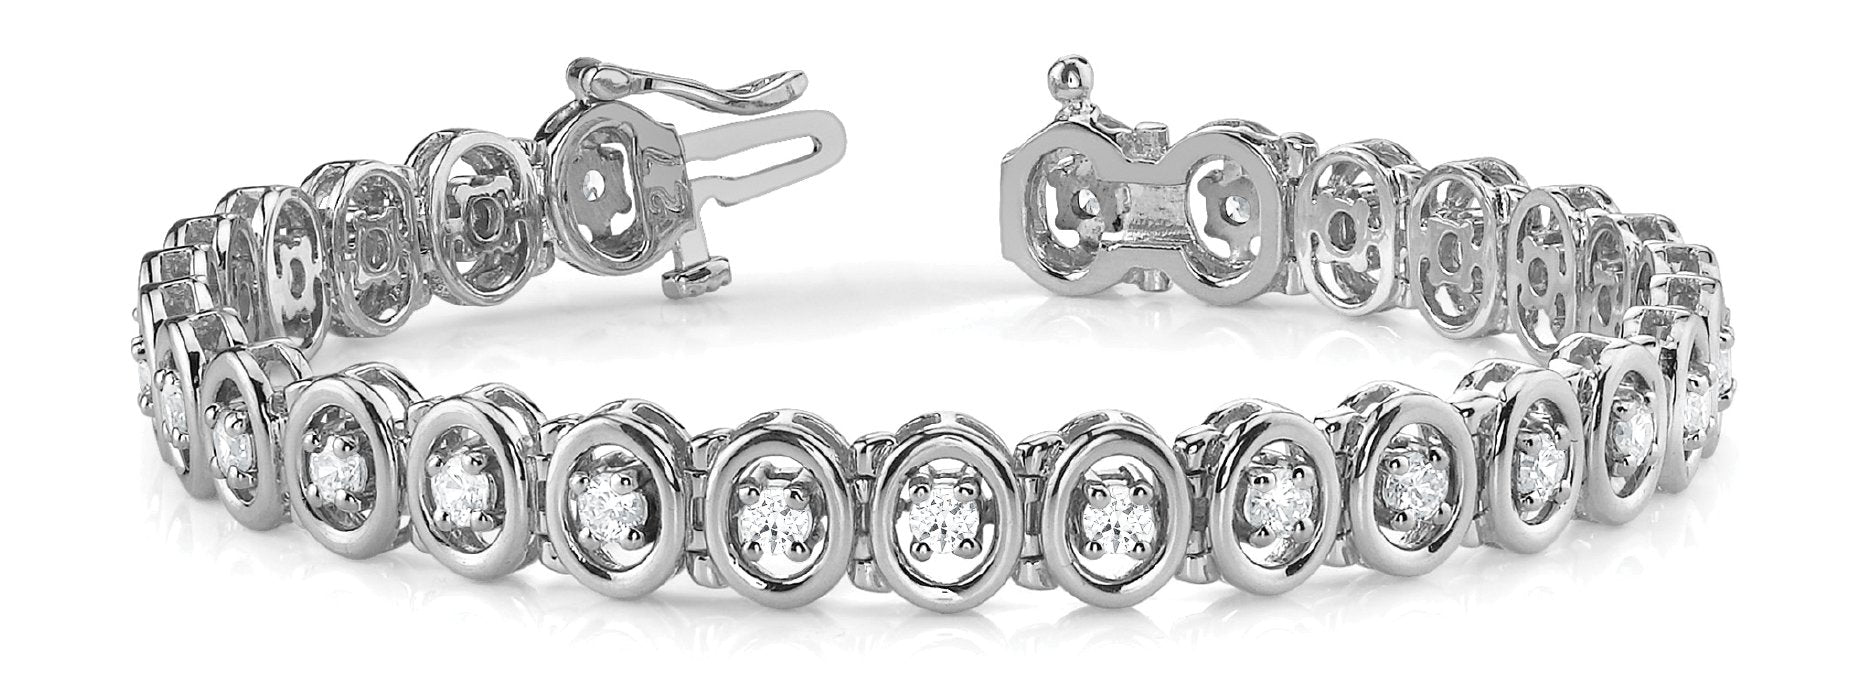 Fancy Diamond Bracelet Ladies 3.04ct tw - 14kt White Gold